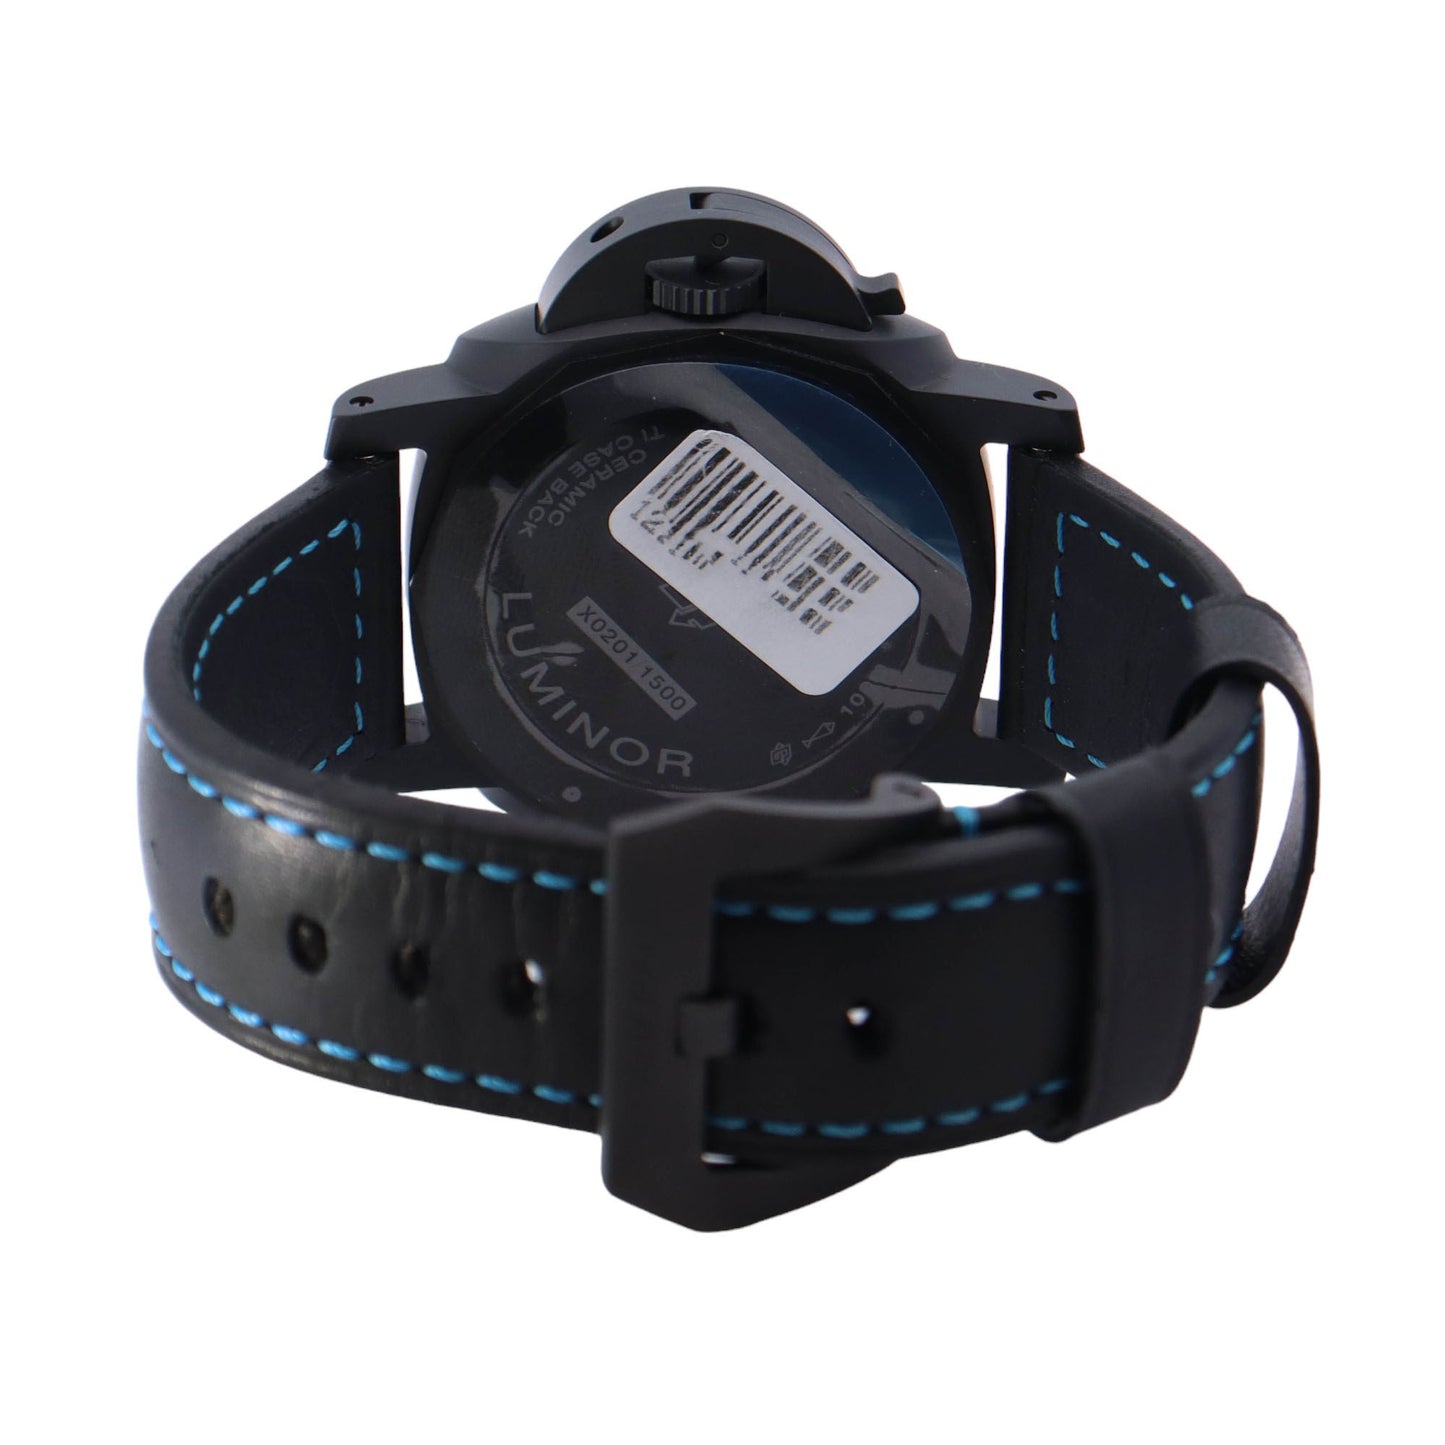 Panerai Luminor GMT 44mm Ceramic Black Stick Dial Watch Reference #: PAM01441 - Happy Jewelers Fine Jewelry Lifetime Warranty